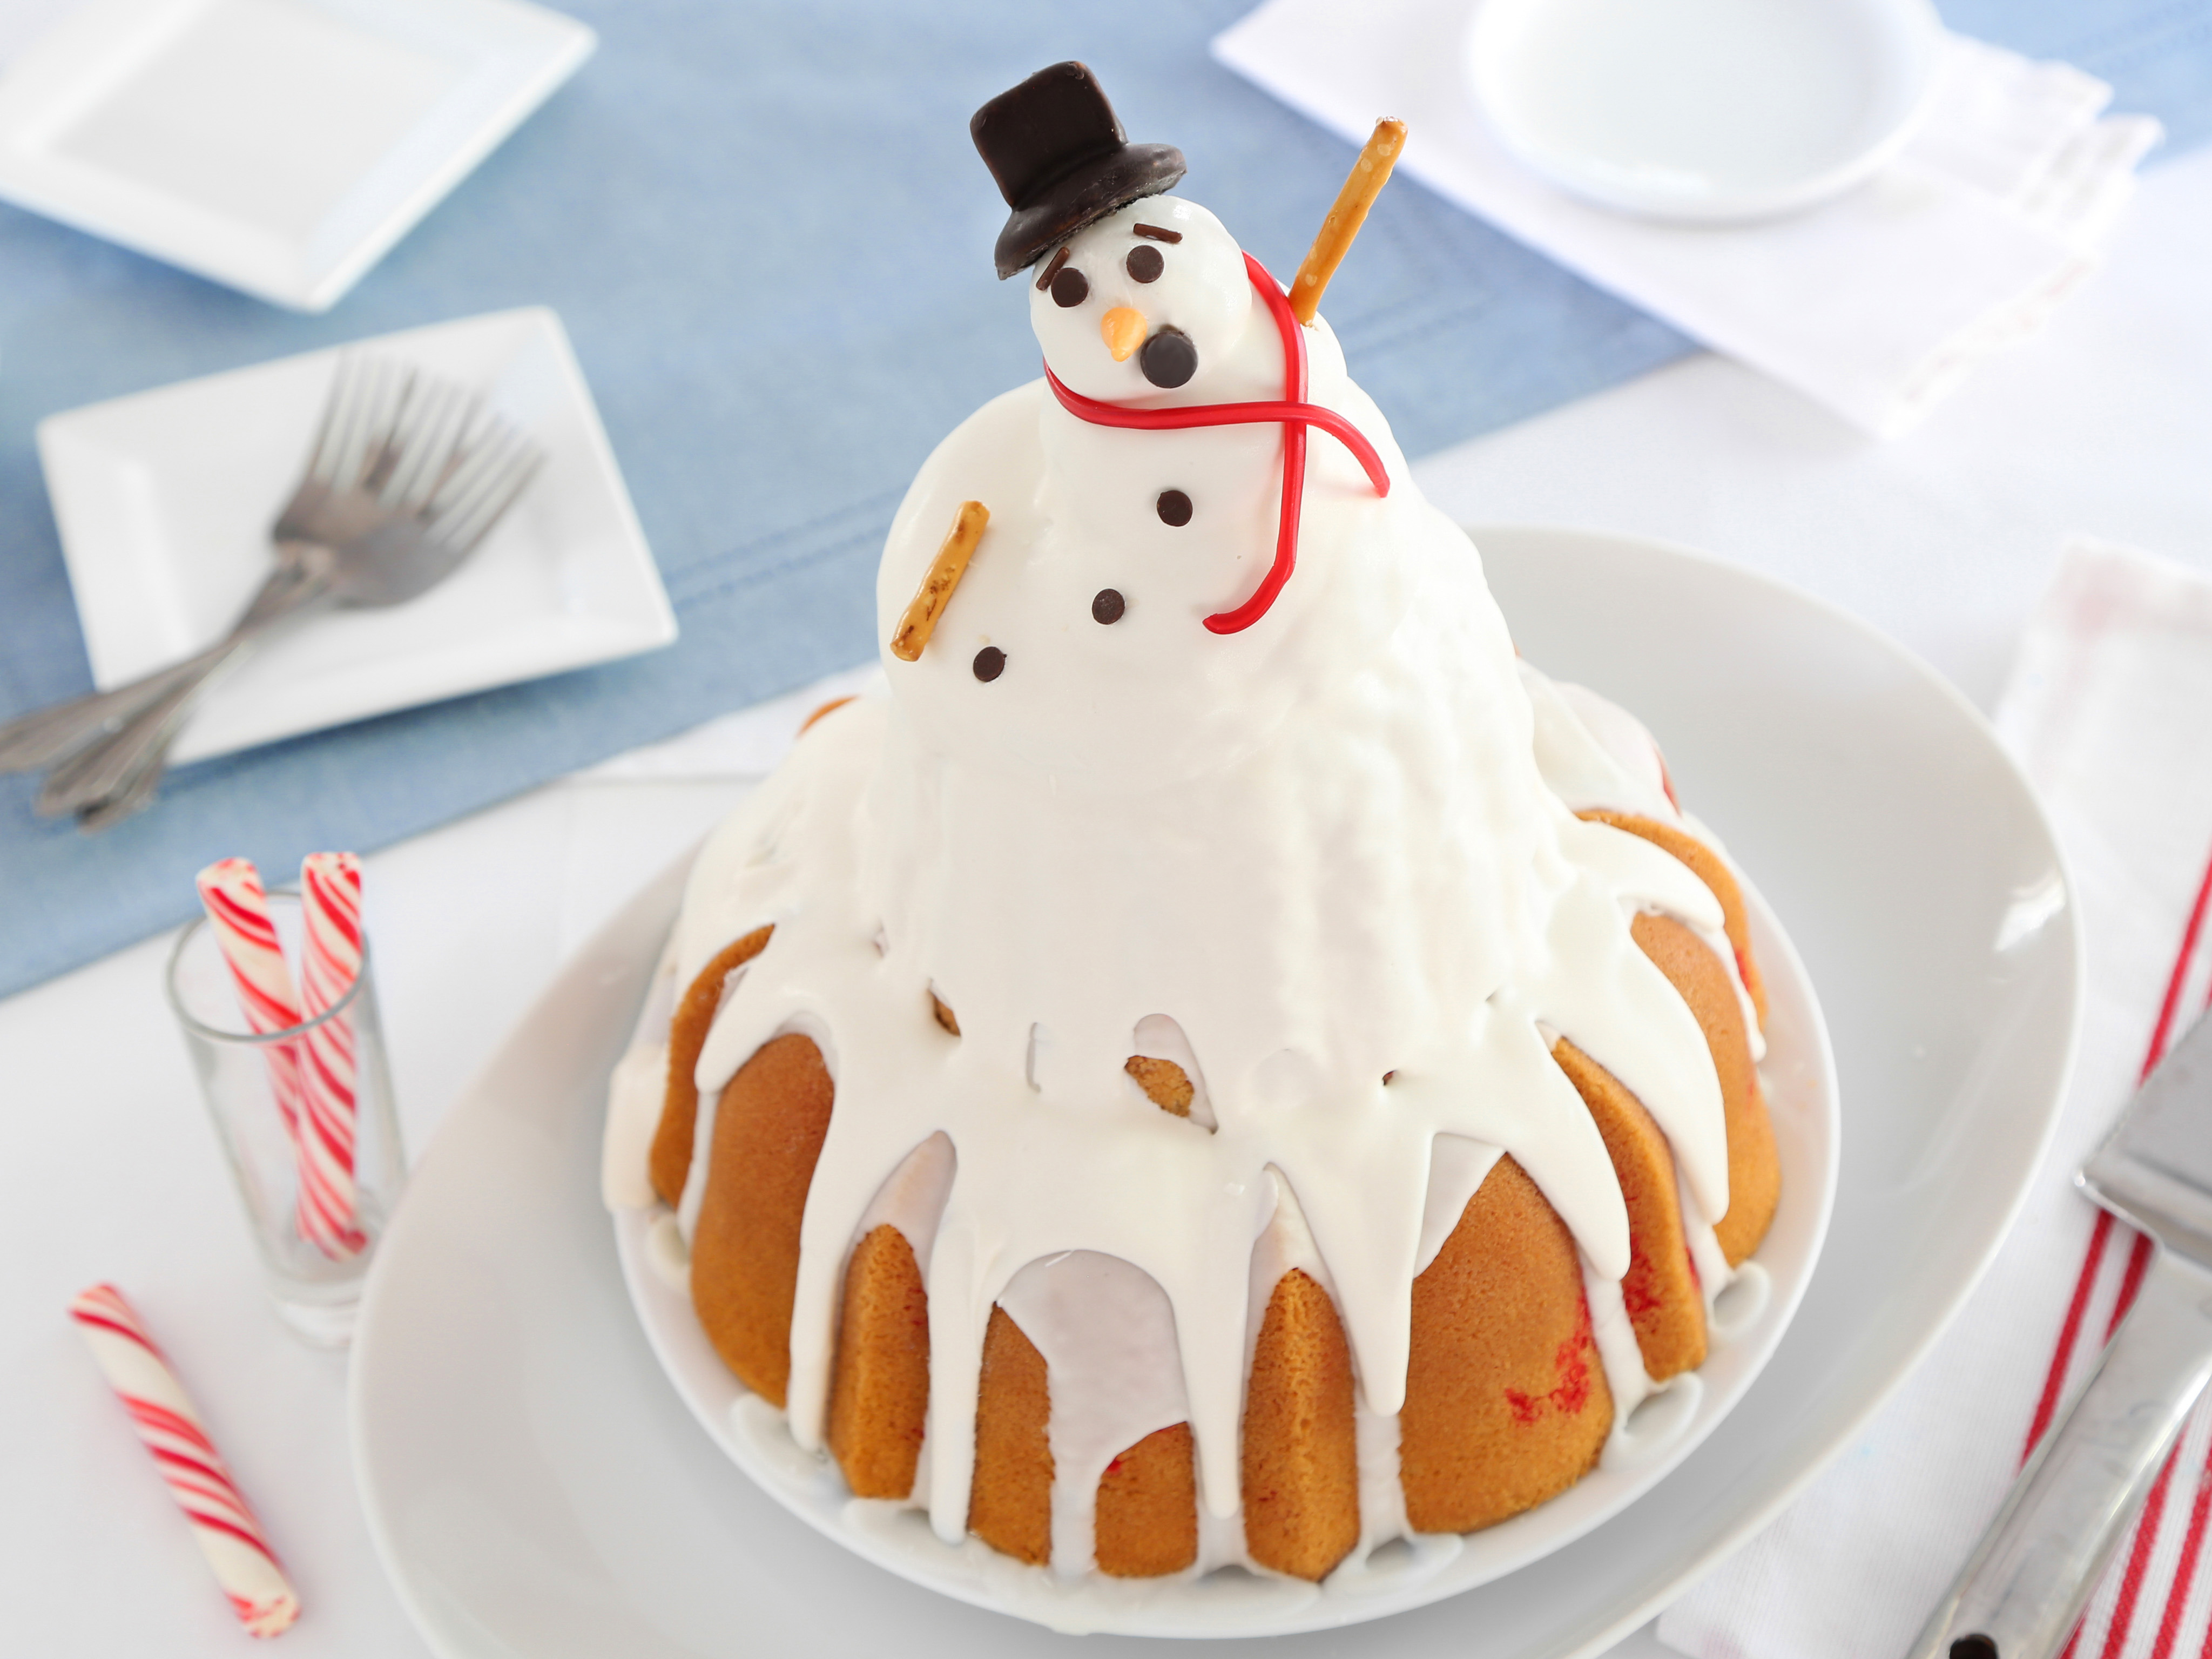 Nordic Ware Snowman Cake Pan  Snowman cake, Holiday baking